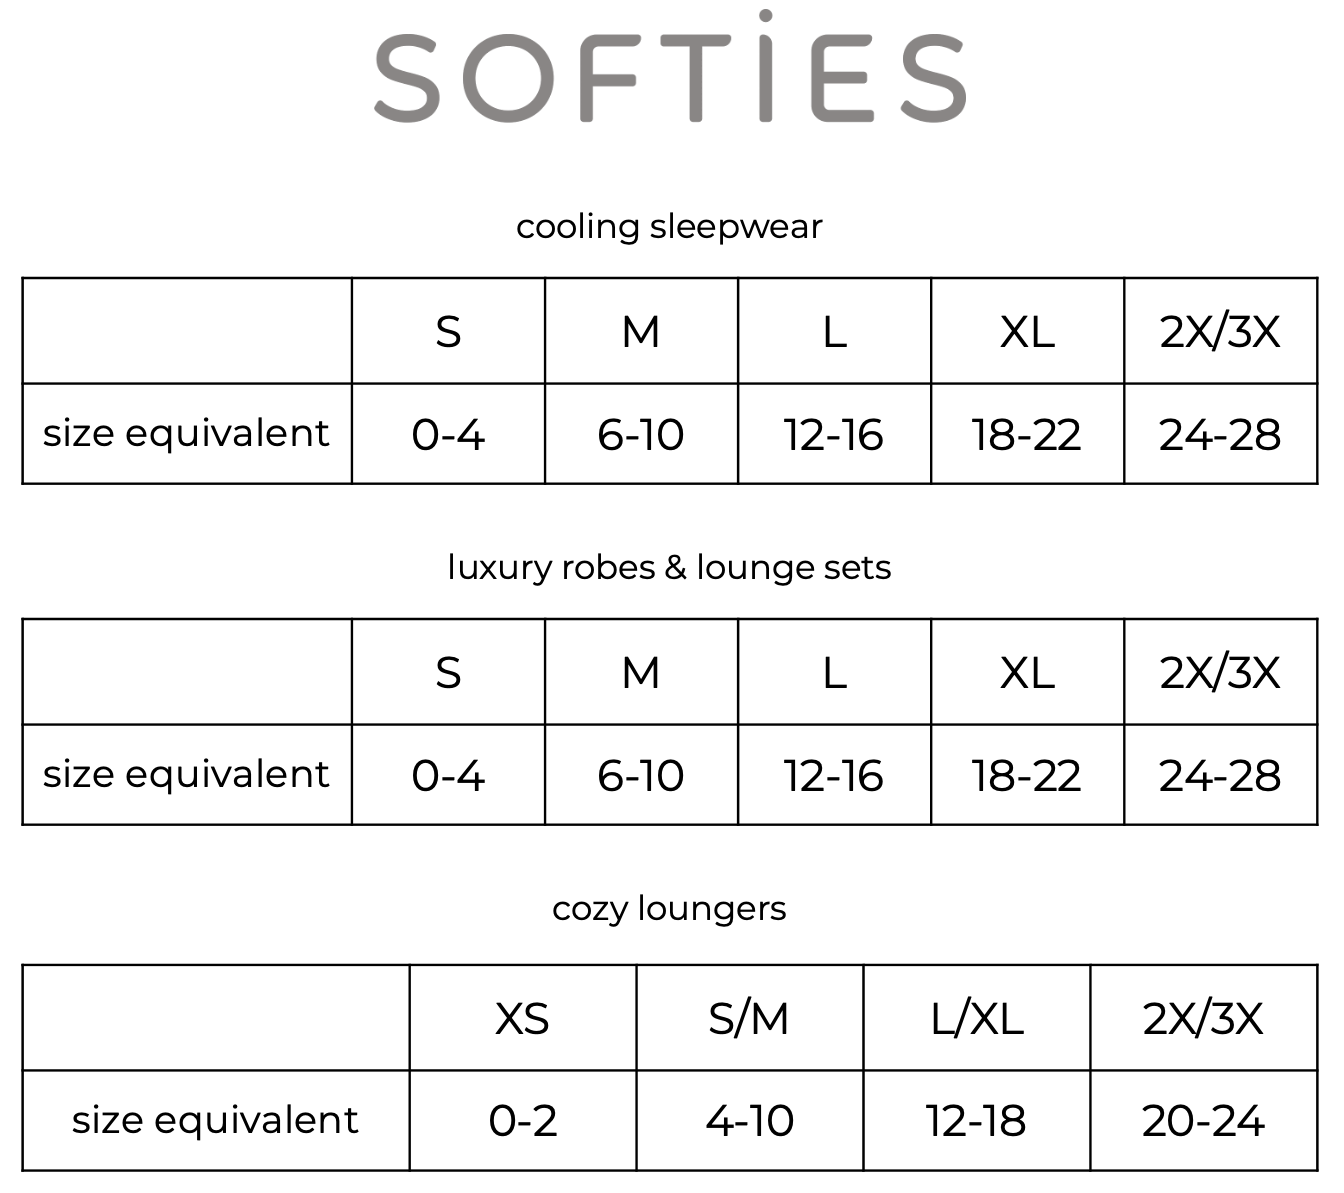 Softies generic size chart